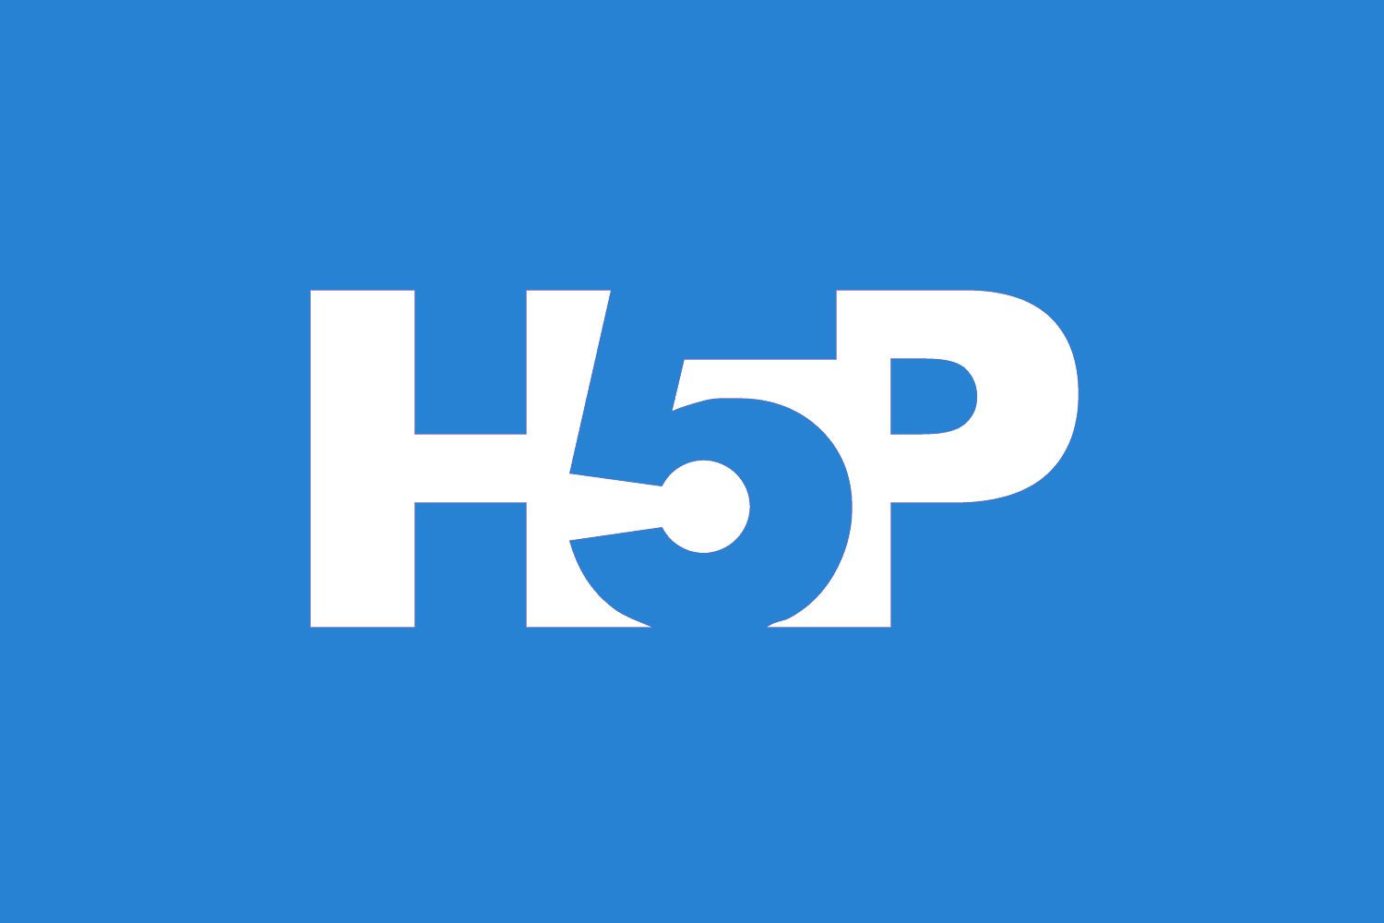 h5p_logo-blue-1384x923-1